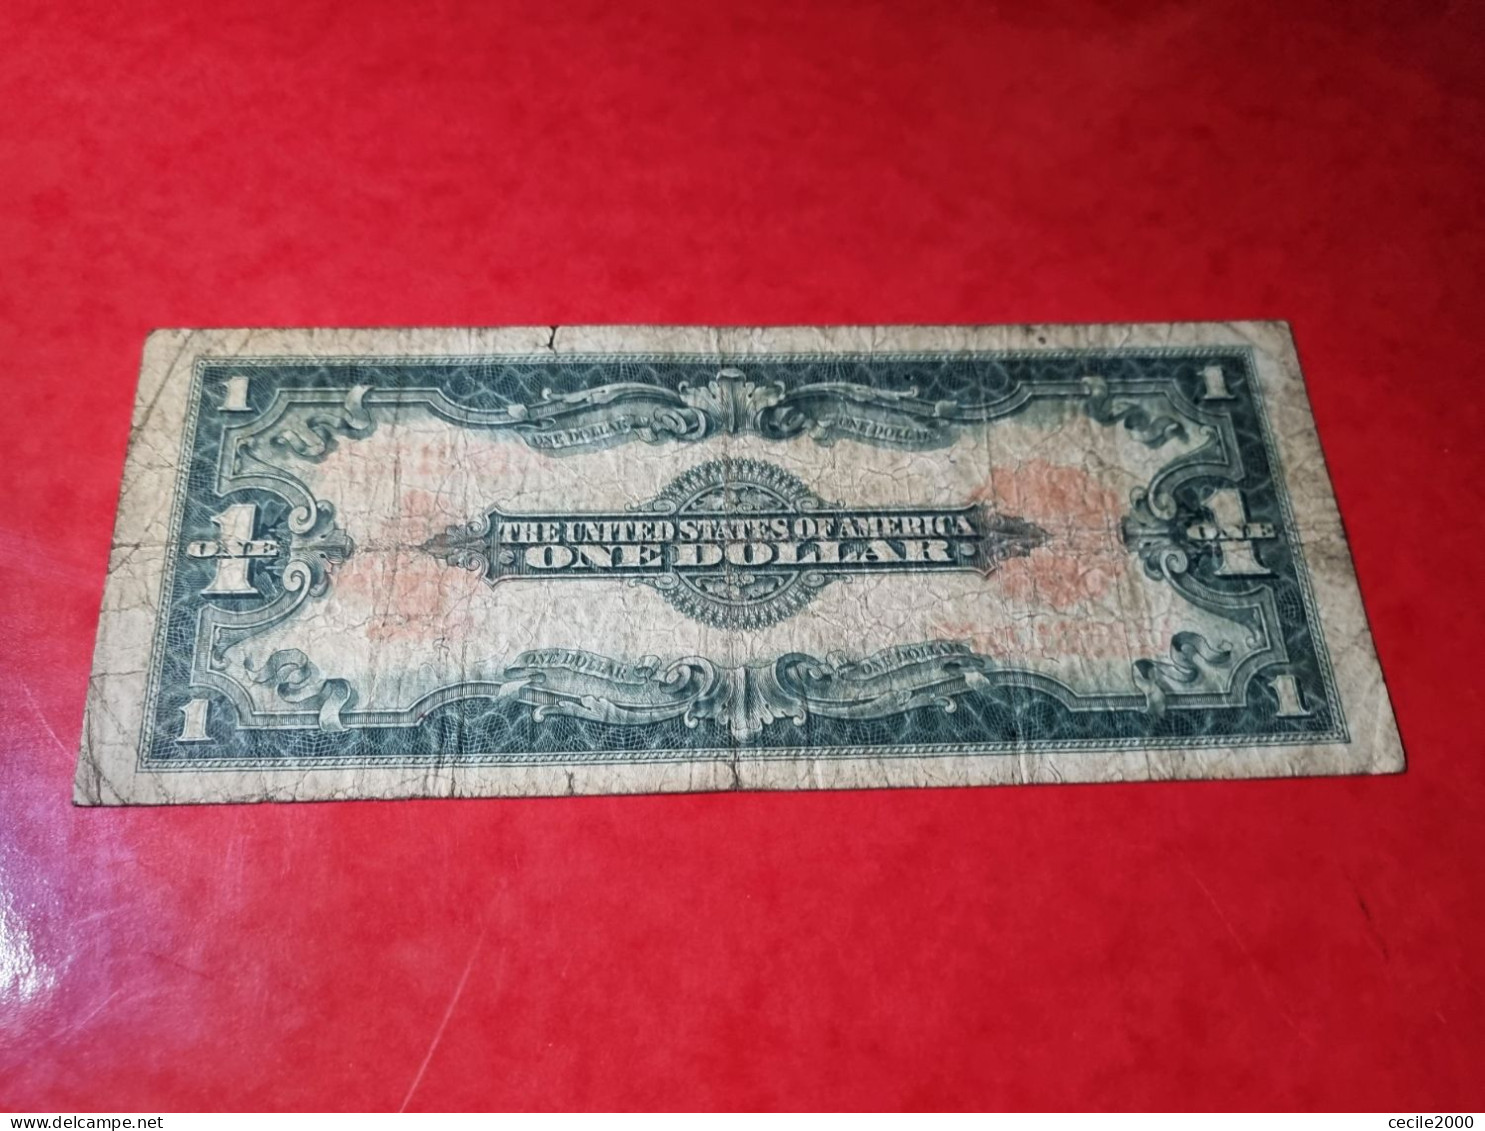 1923 USA $1 DOLLAR *RED SEAL* UNITED STATES BANKNOTE F/F+ BILLETE ESTADOS UNIDOS *COMPRAS MULTIPLES CONSULTAR* - Billets Des États-Unis (1862-1923)